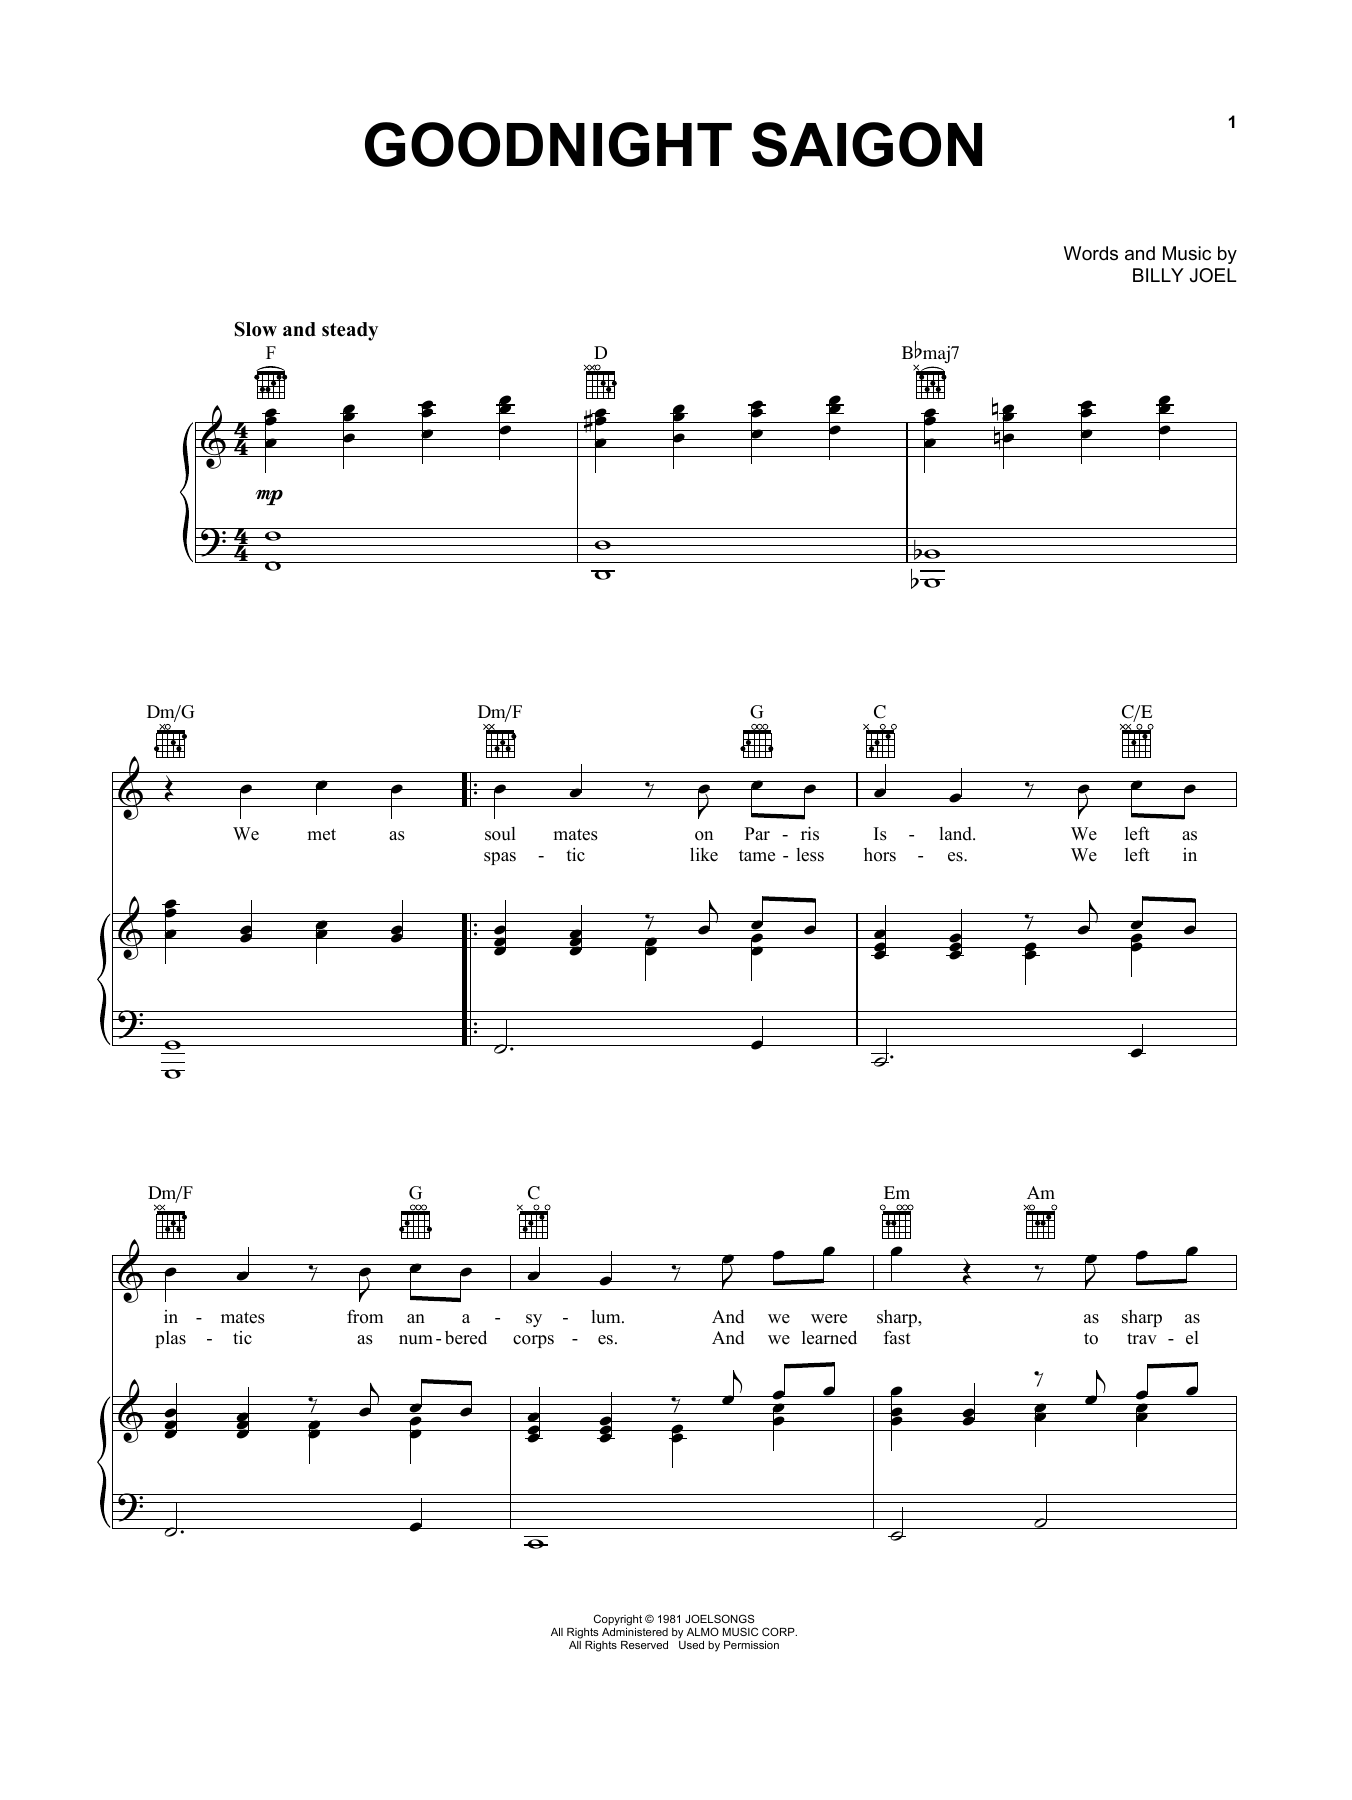 Billy Joel Goodnight Saigon Sheet Music Notes & Chords for Melody Line, Lyrics & Chords - Download or Print PDF